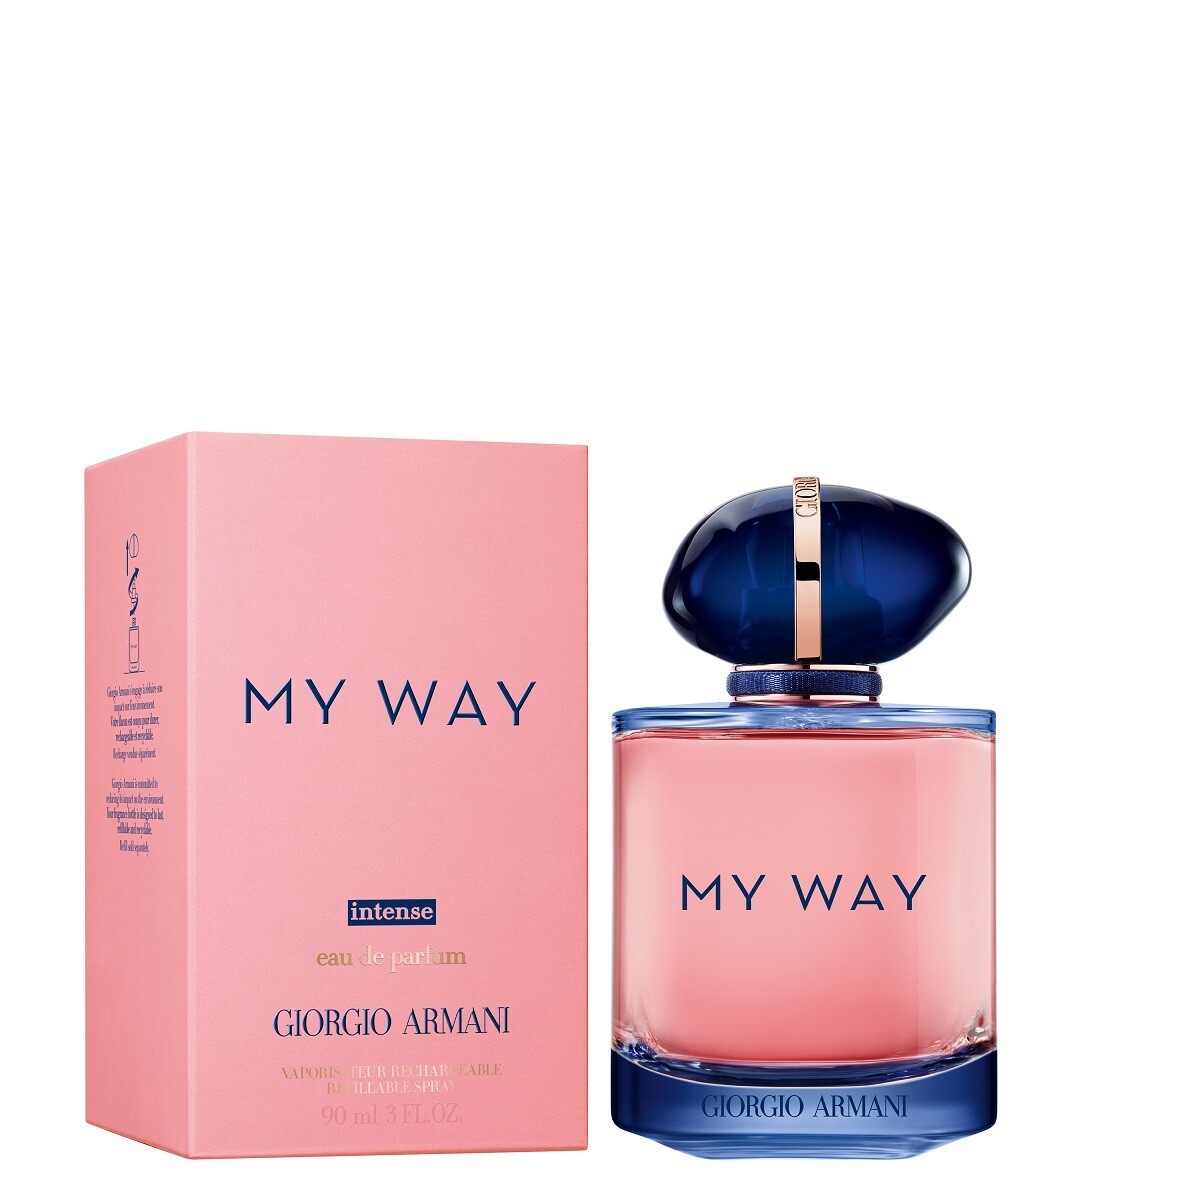 Perfume My Way Intense Edp Giorgio Armani 90 Ml. 